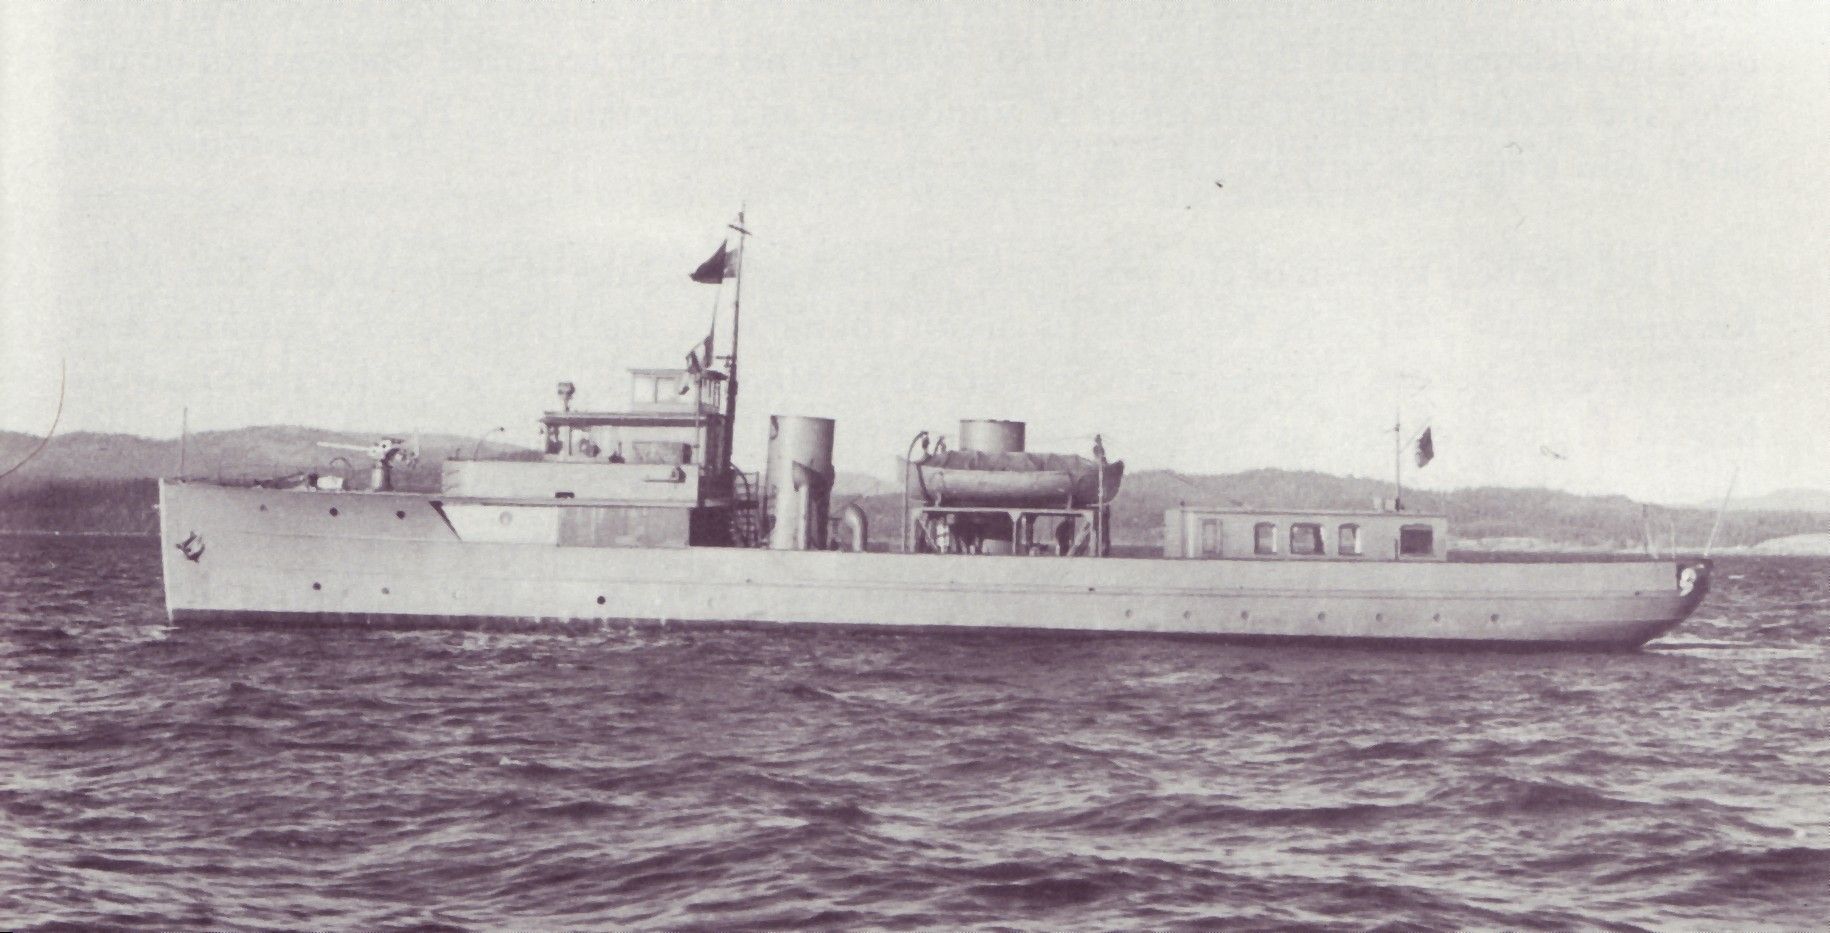 HMCS Cougar